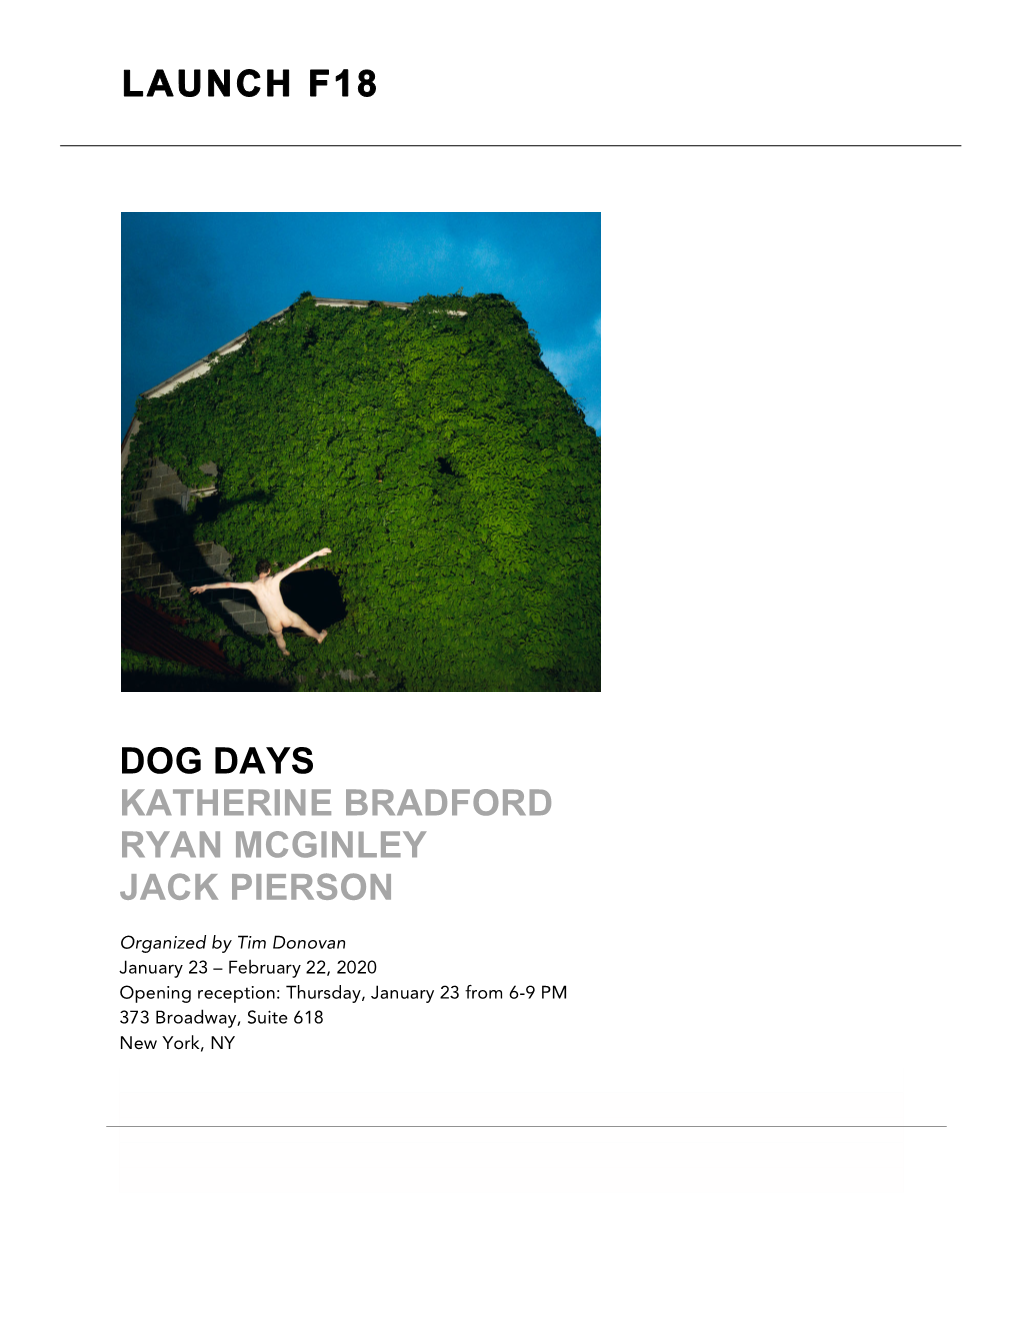 Launch F18 Dog Days Katherine Bradford Ryan